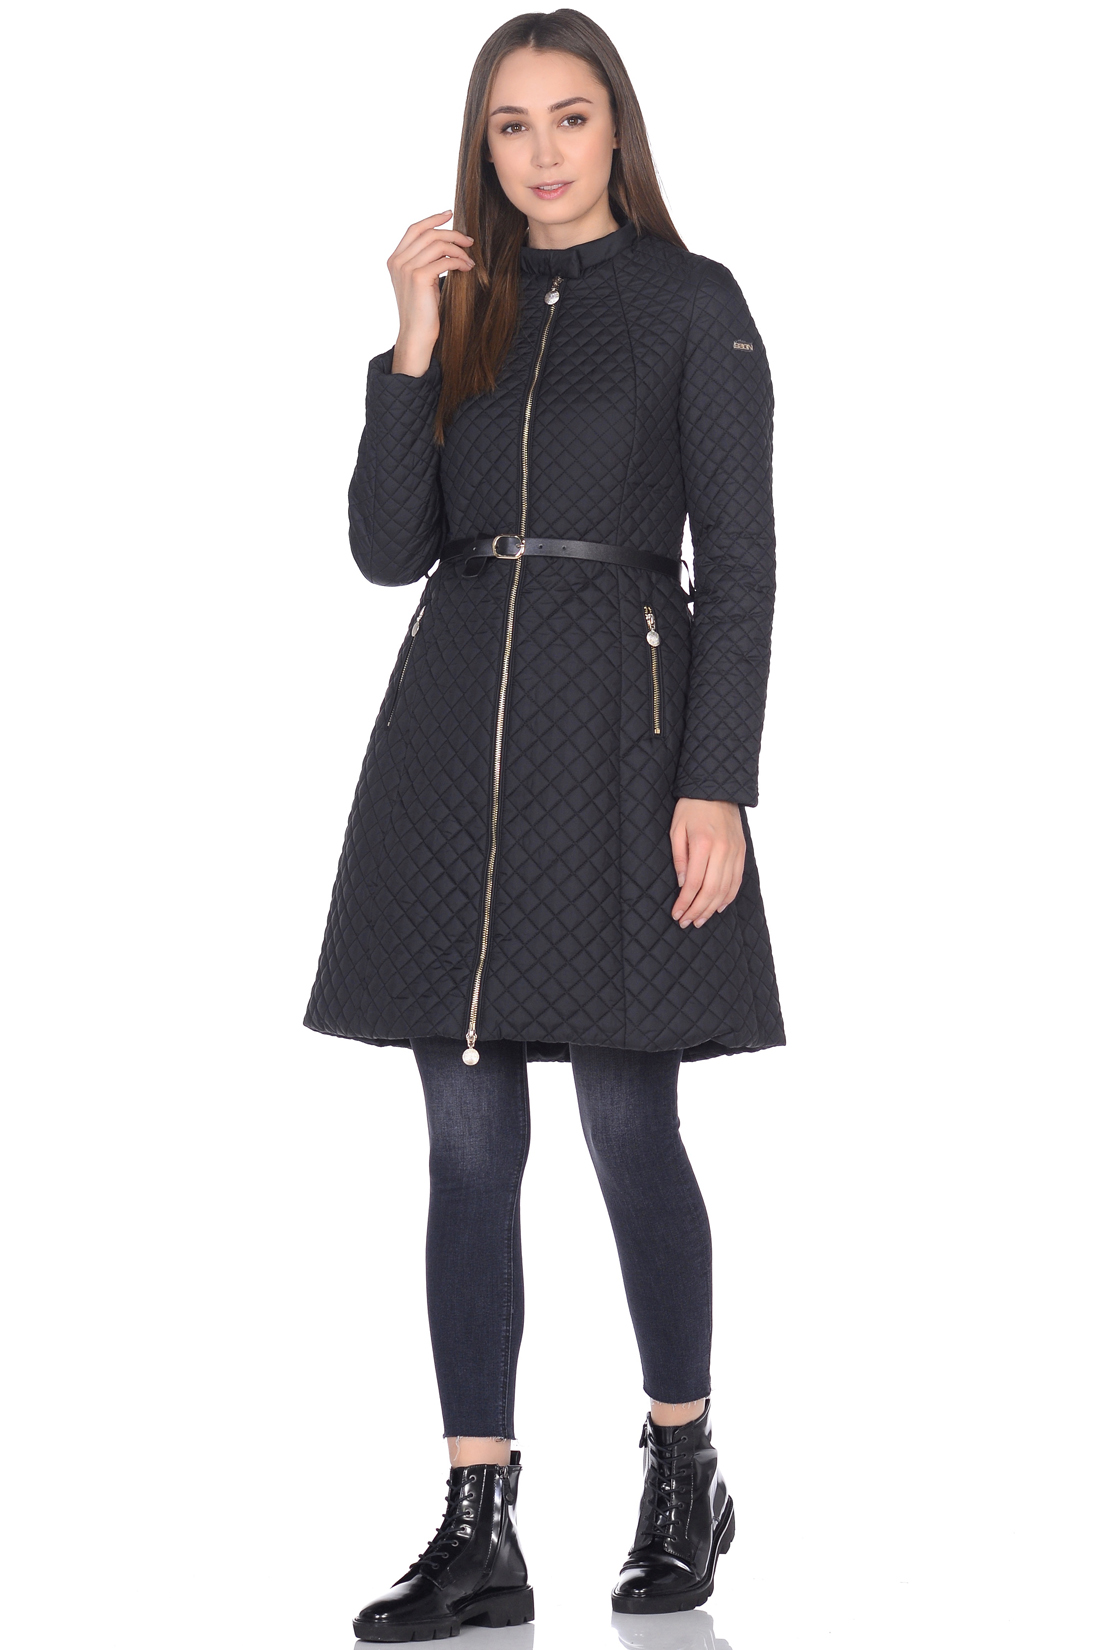 Чёрная куртка с ремешком (арт. baon B039037), размер S, цвет черный Чёрная куртка с ремешком (арт. baon B039037) - фото 4